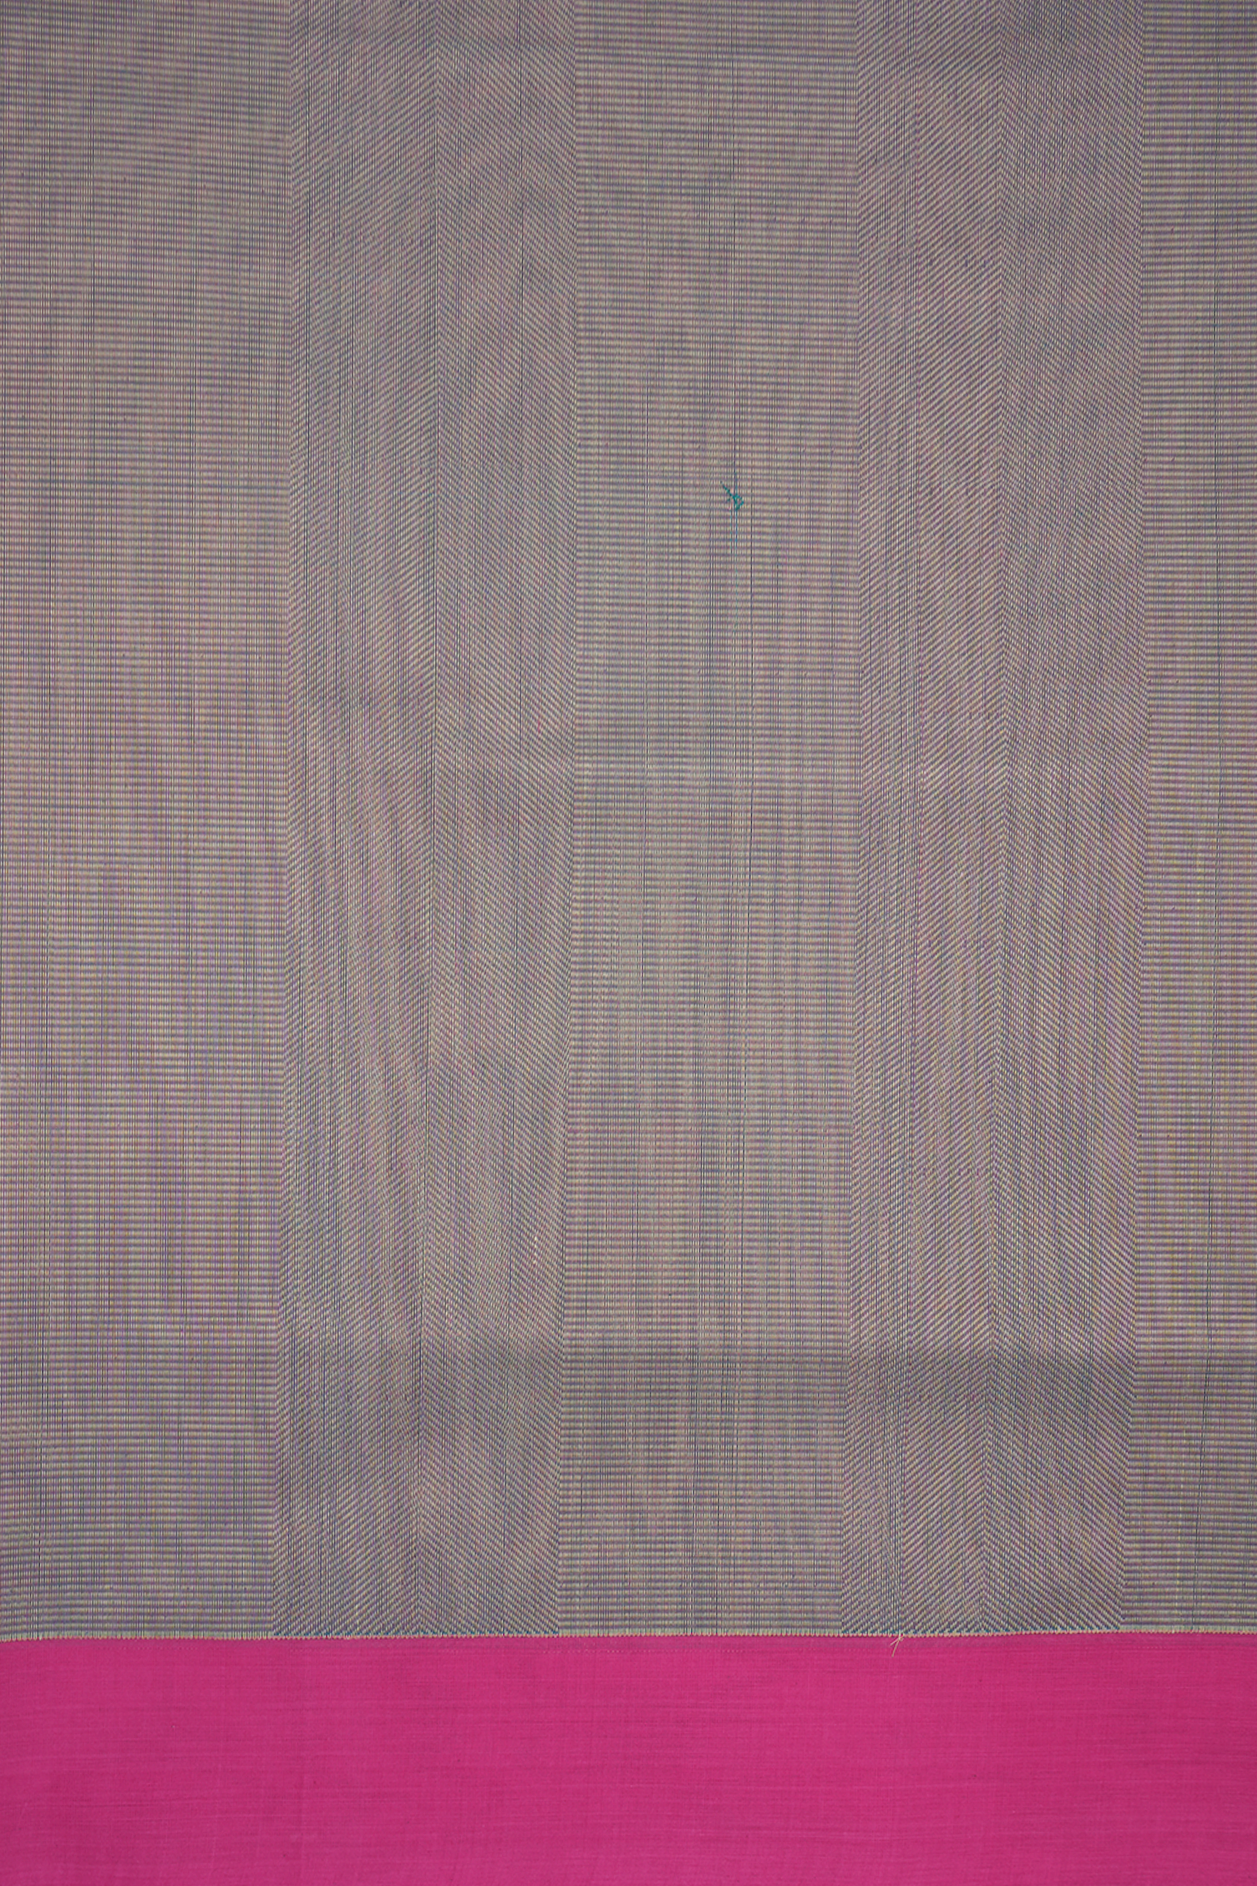 Contrast Border Pale Purple Coimbatore Cotton Saree